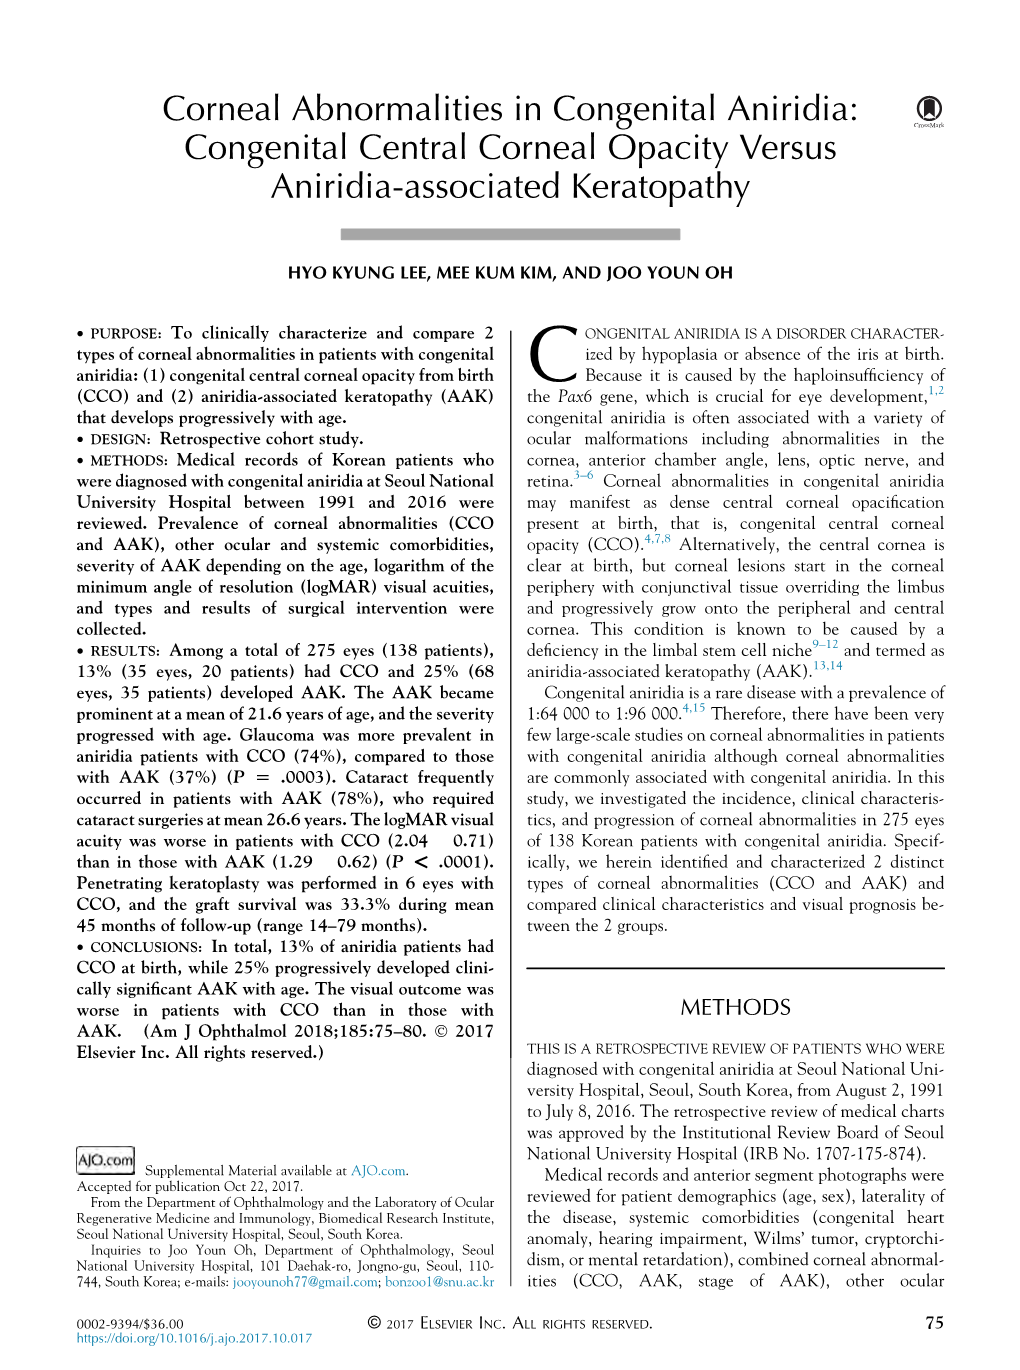 Corneal Abnormalities in Congenital Aniridia: Congenital Central Corneal Opacity Versus Aniridia-Associated Keratopathy